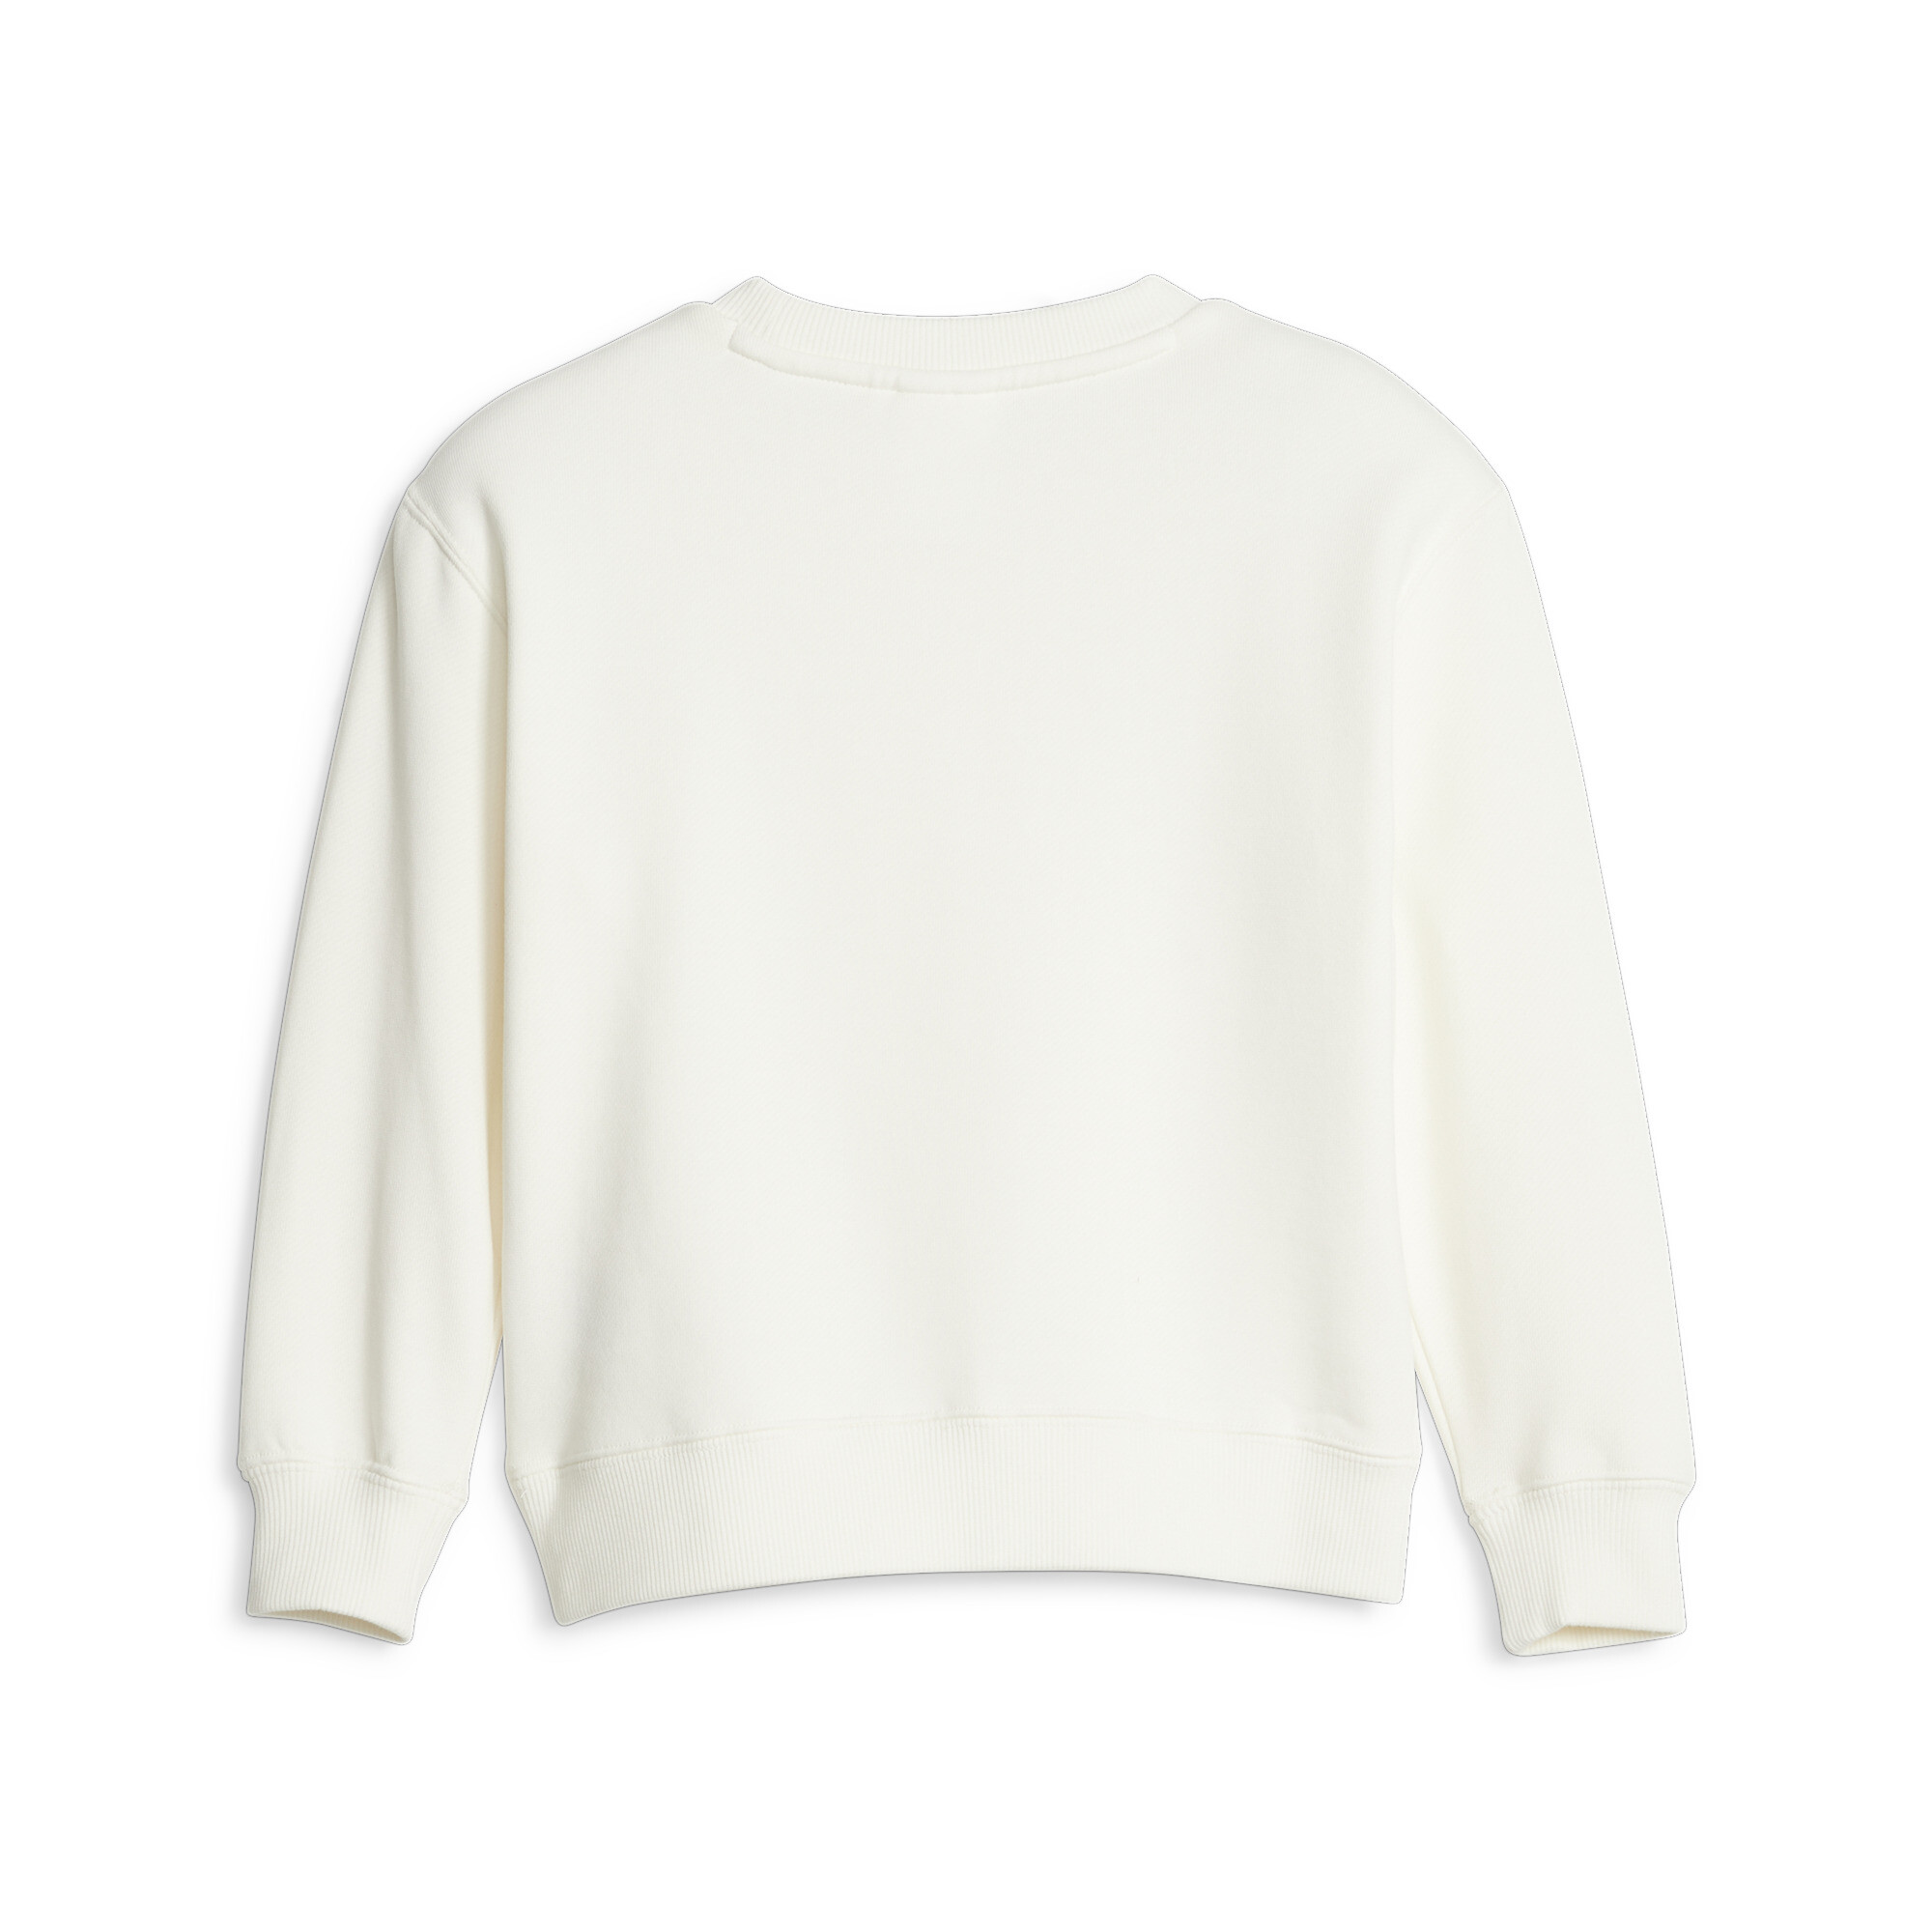 PUMA X LIBERTY Sweatshirt In White, Size 4-5 Youth